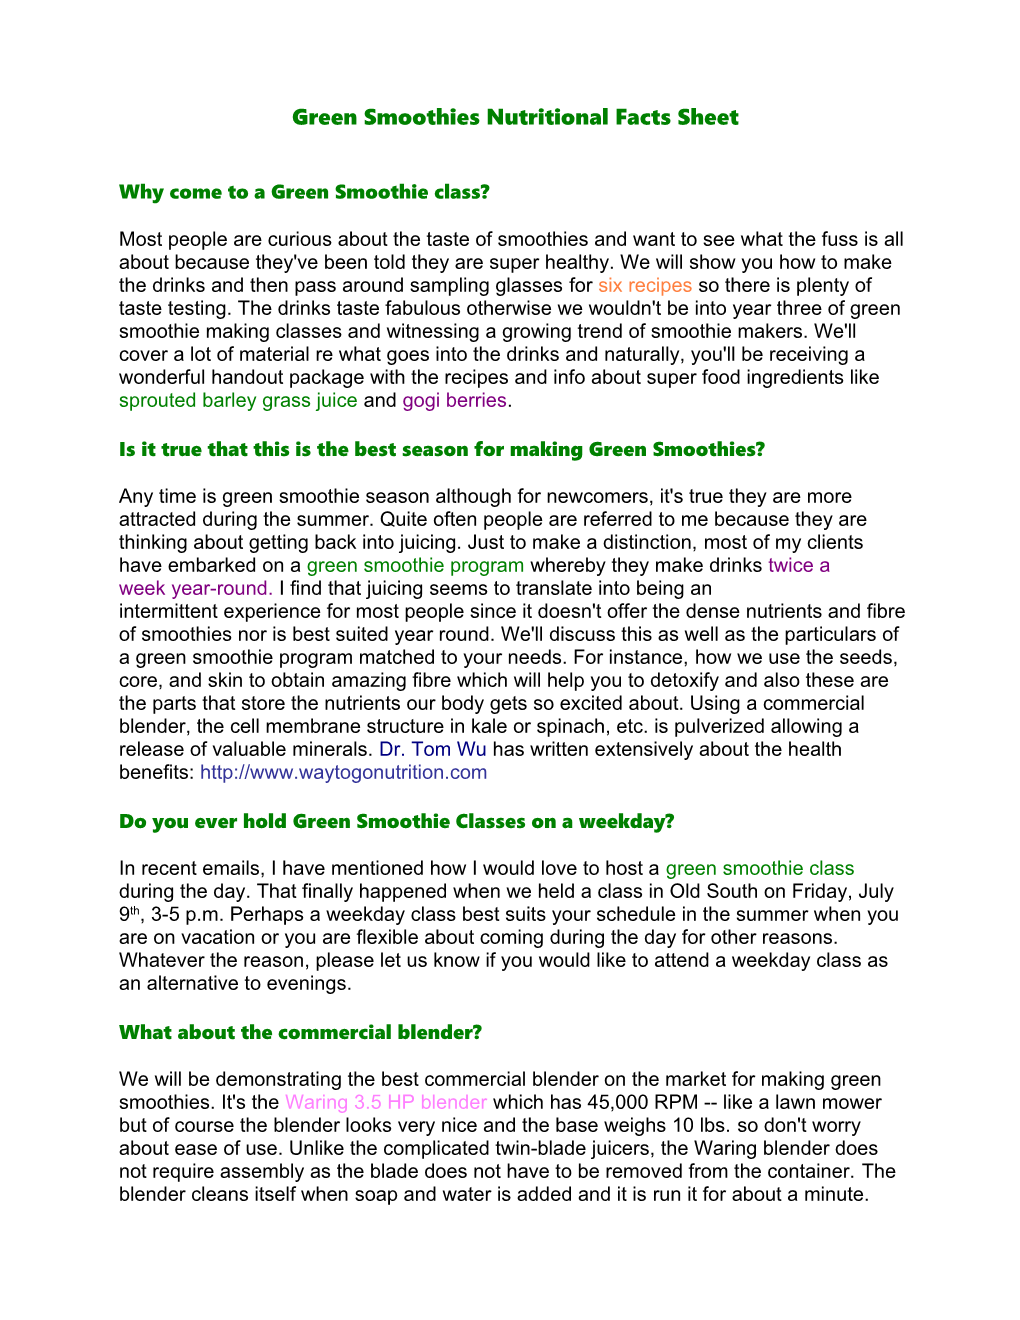 Green Smoothies Fact Sheet